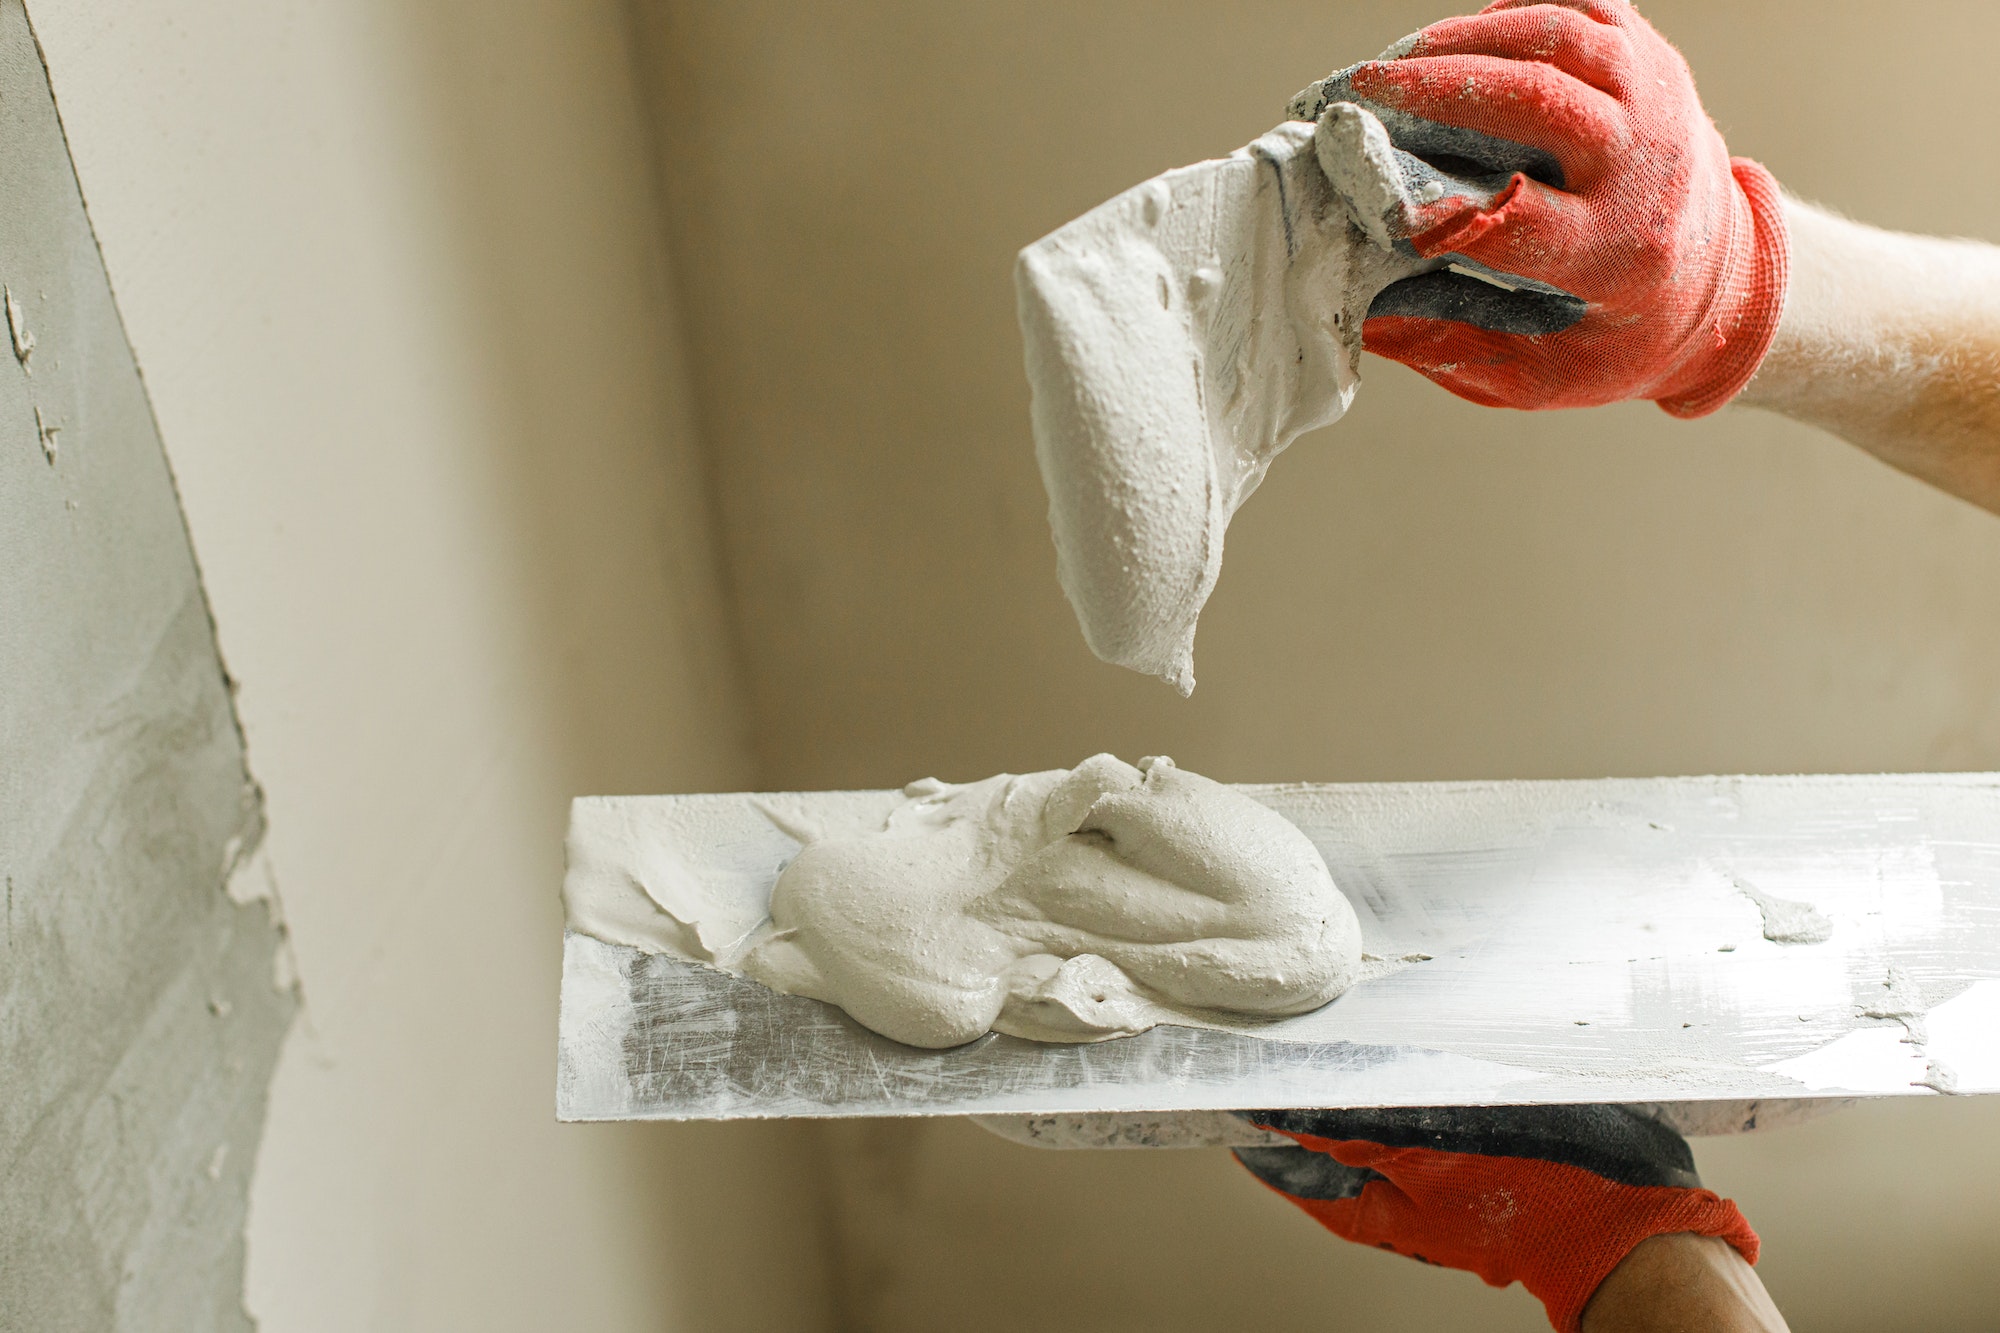 Handyman plastering walls with gypsum plaster and trowel